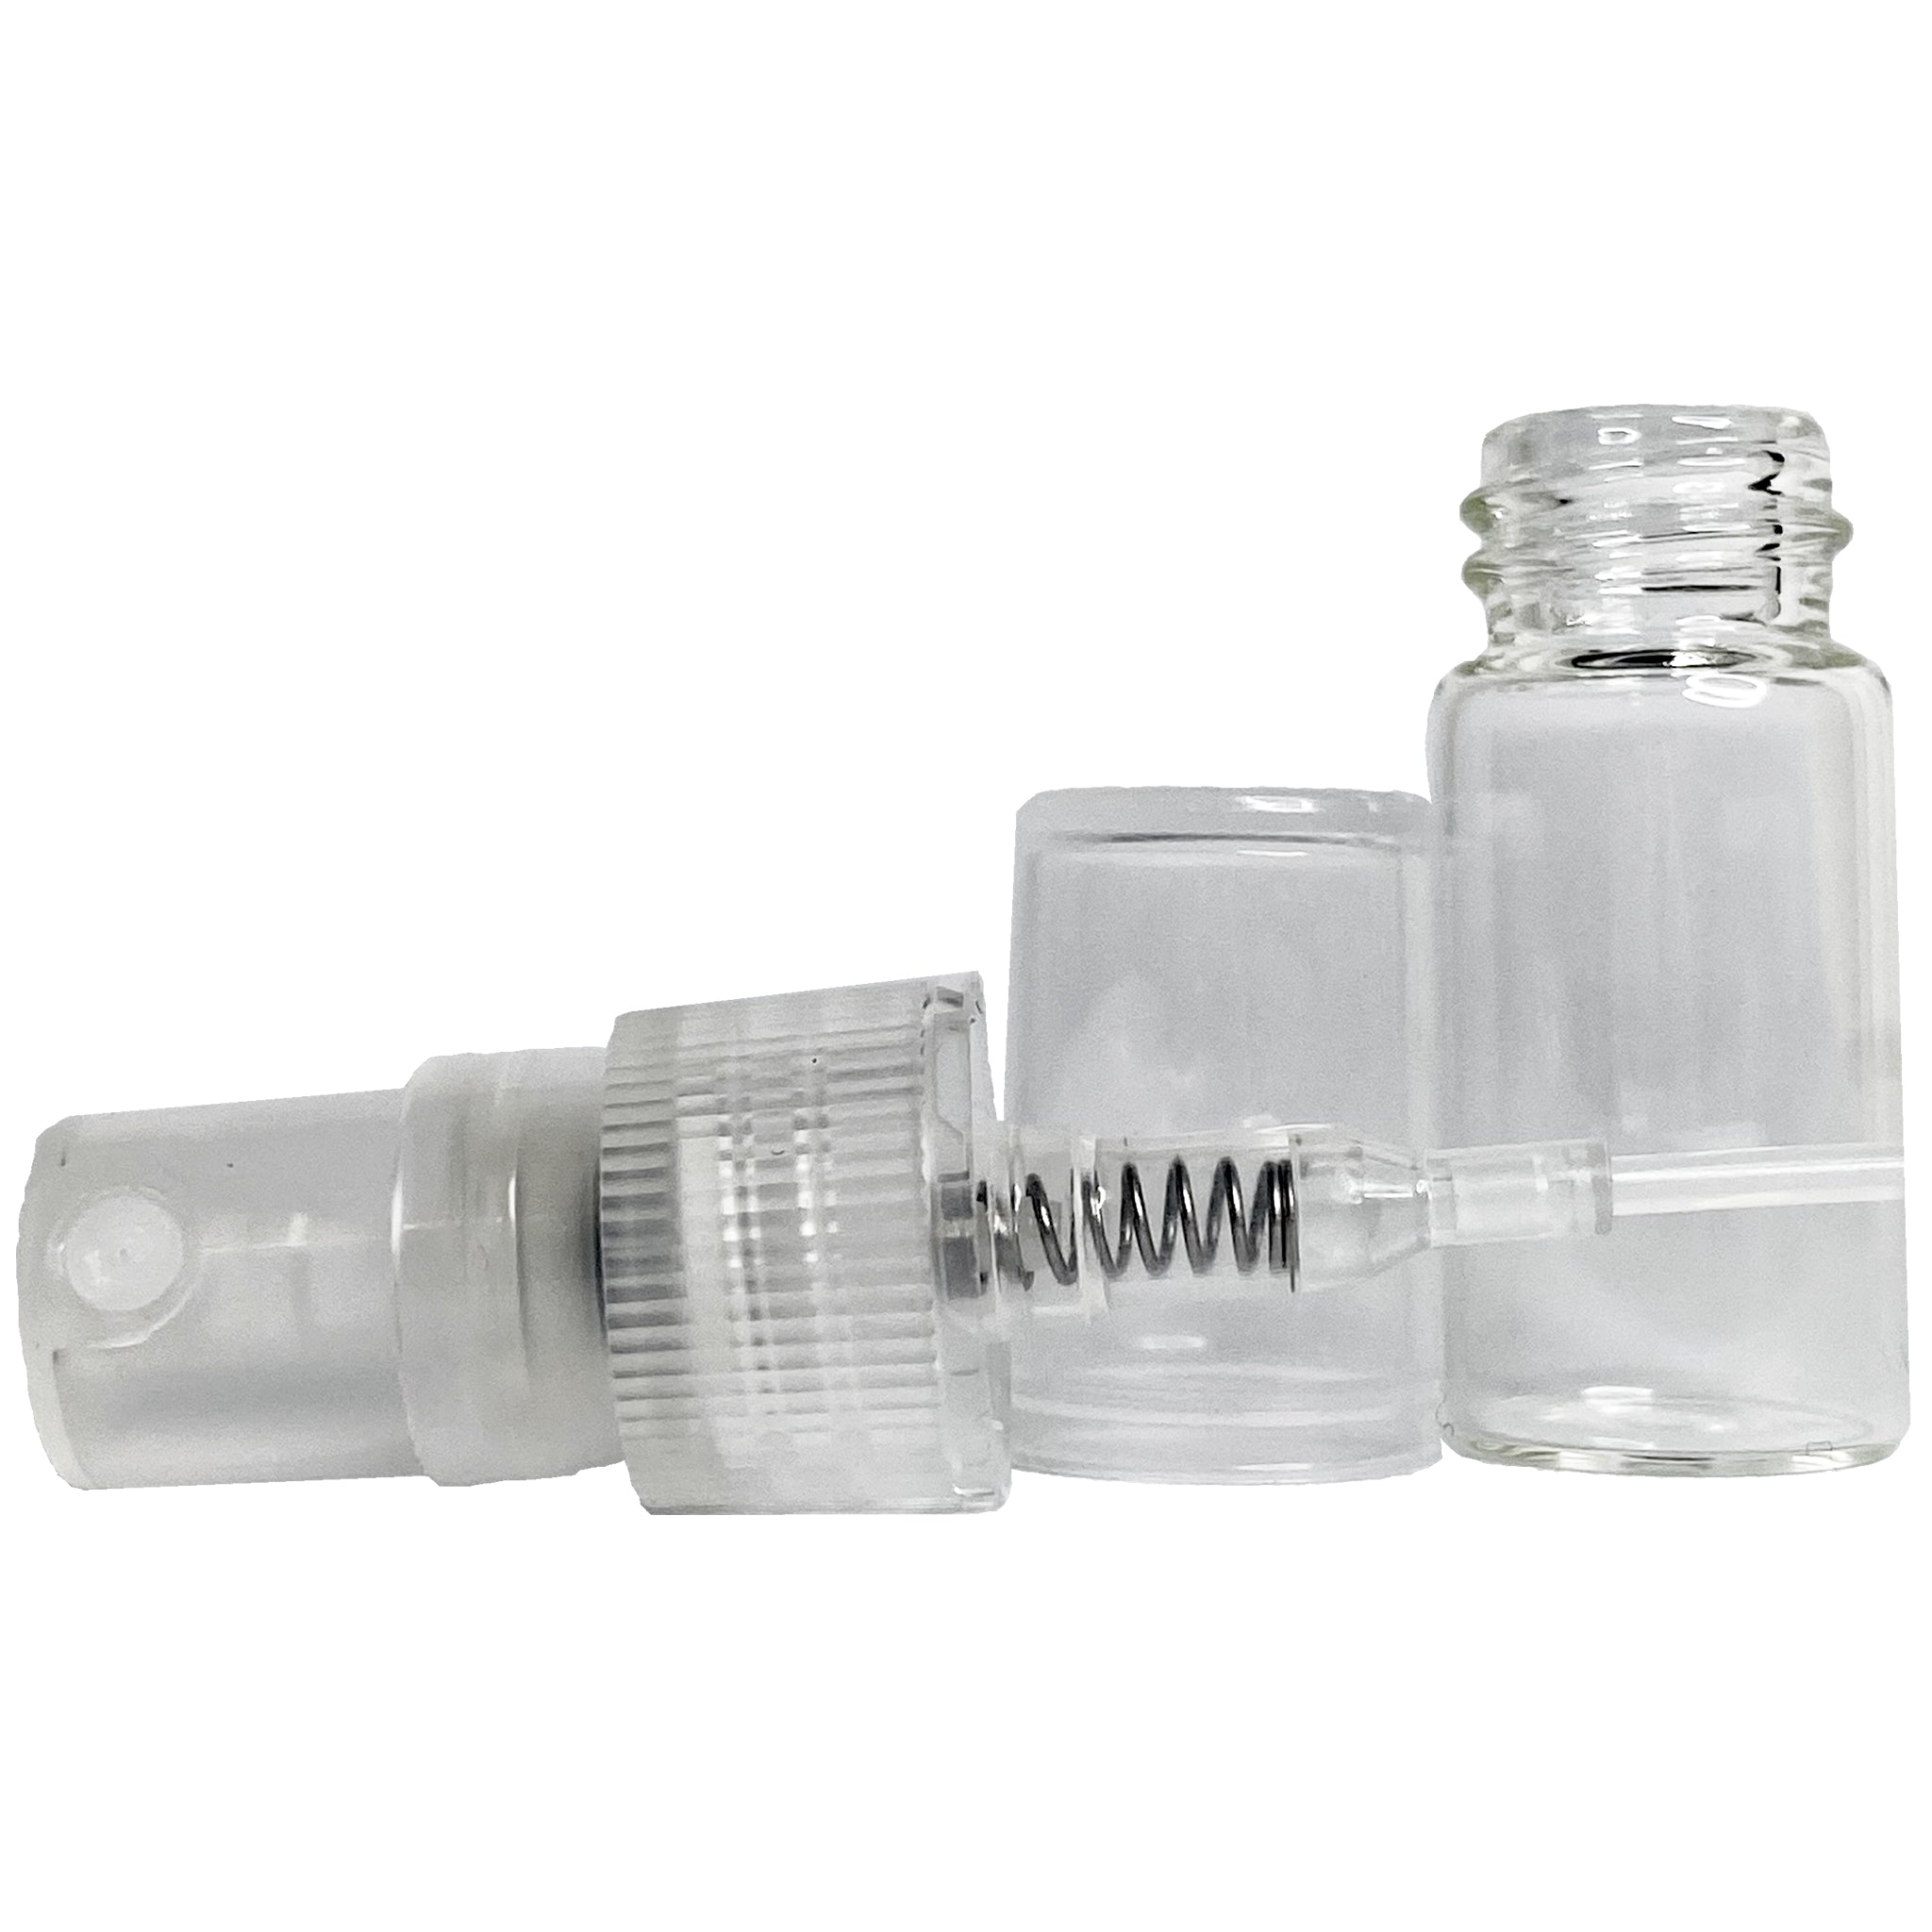 2ml 0.07oz Perfume Glass Spray Bottles Clear Atomizers